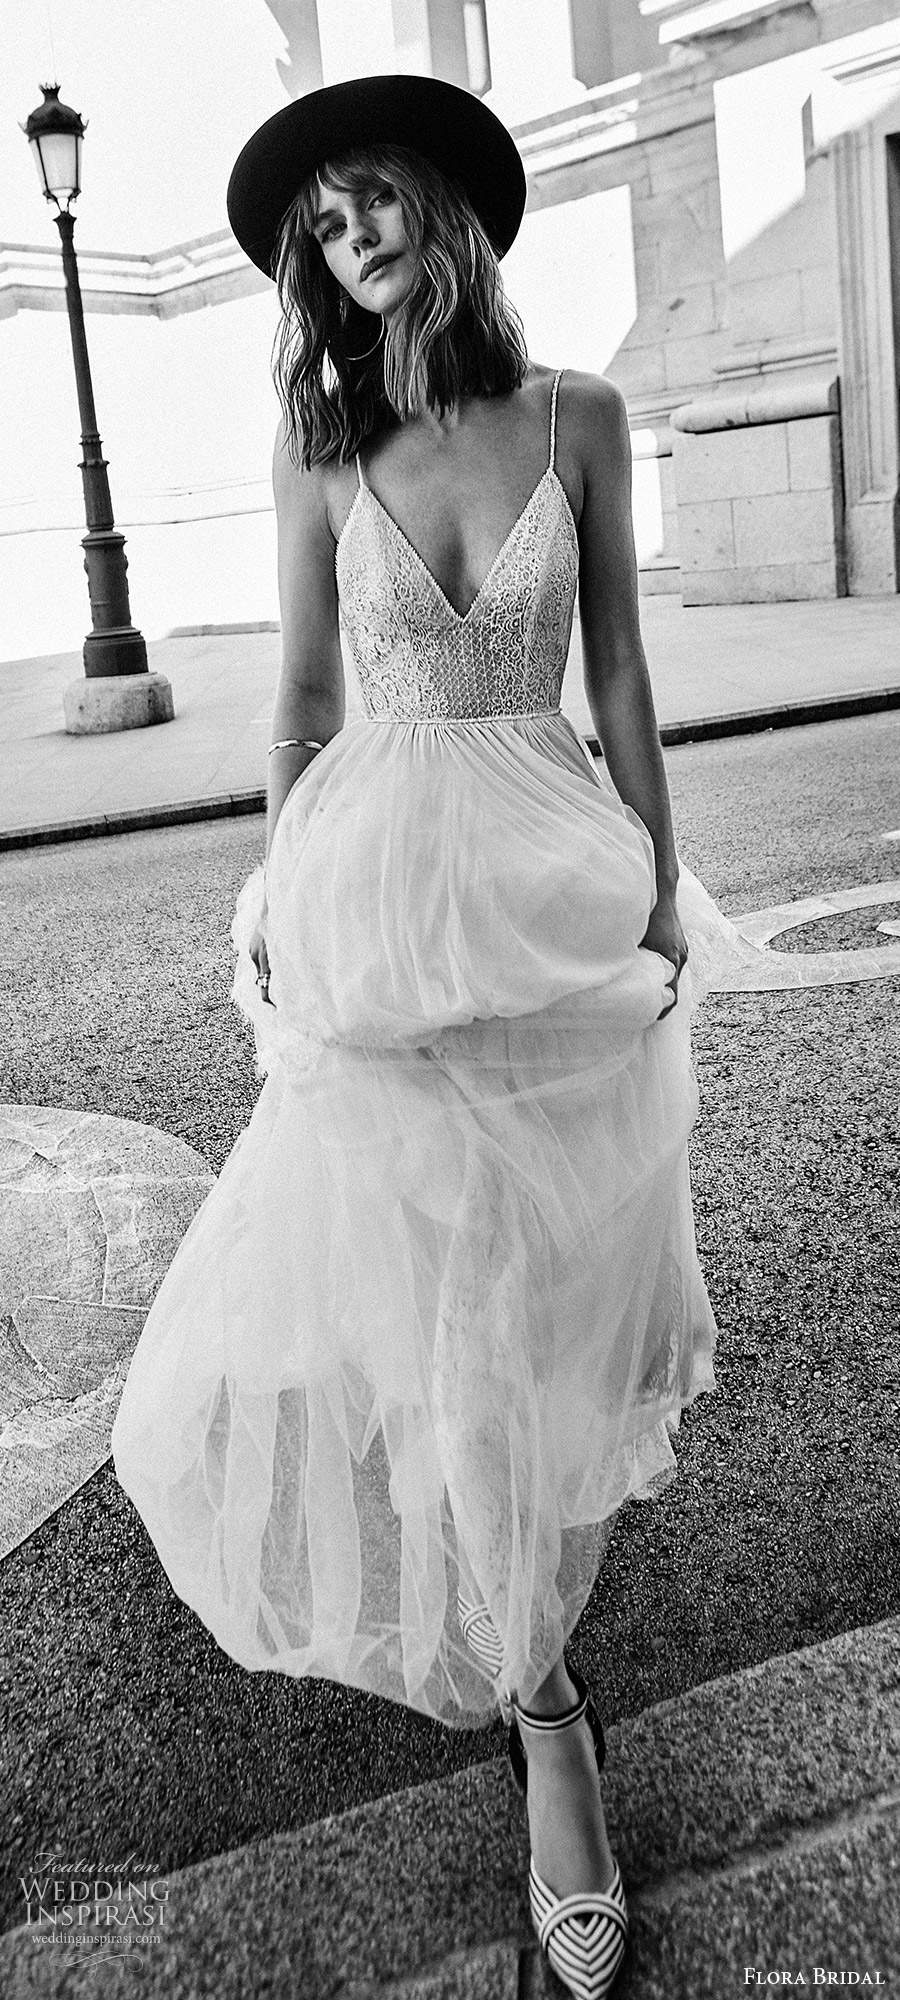 flora bridal 2020 bridal sleeveless thin straps plunging v neckline embellished lace bodice a line ball gown wedding dress low back (2) mv